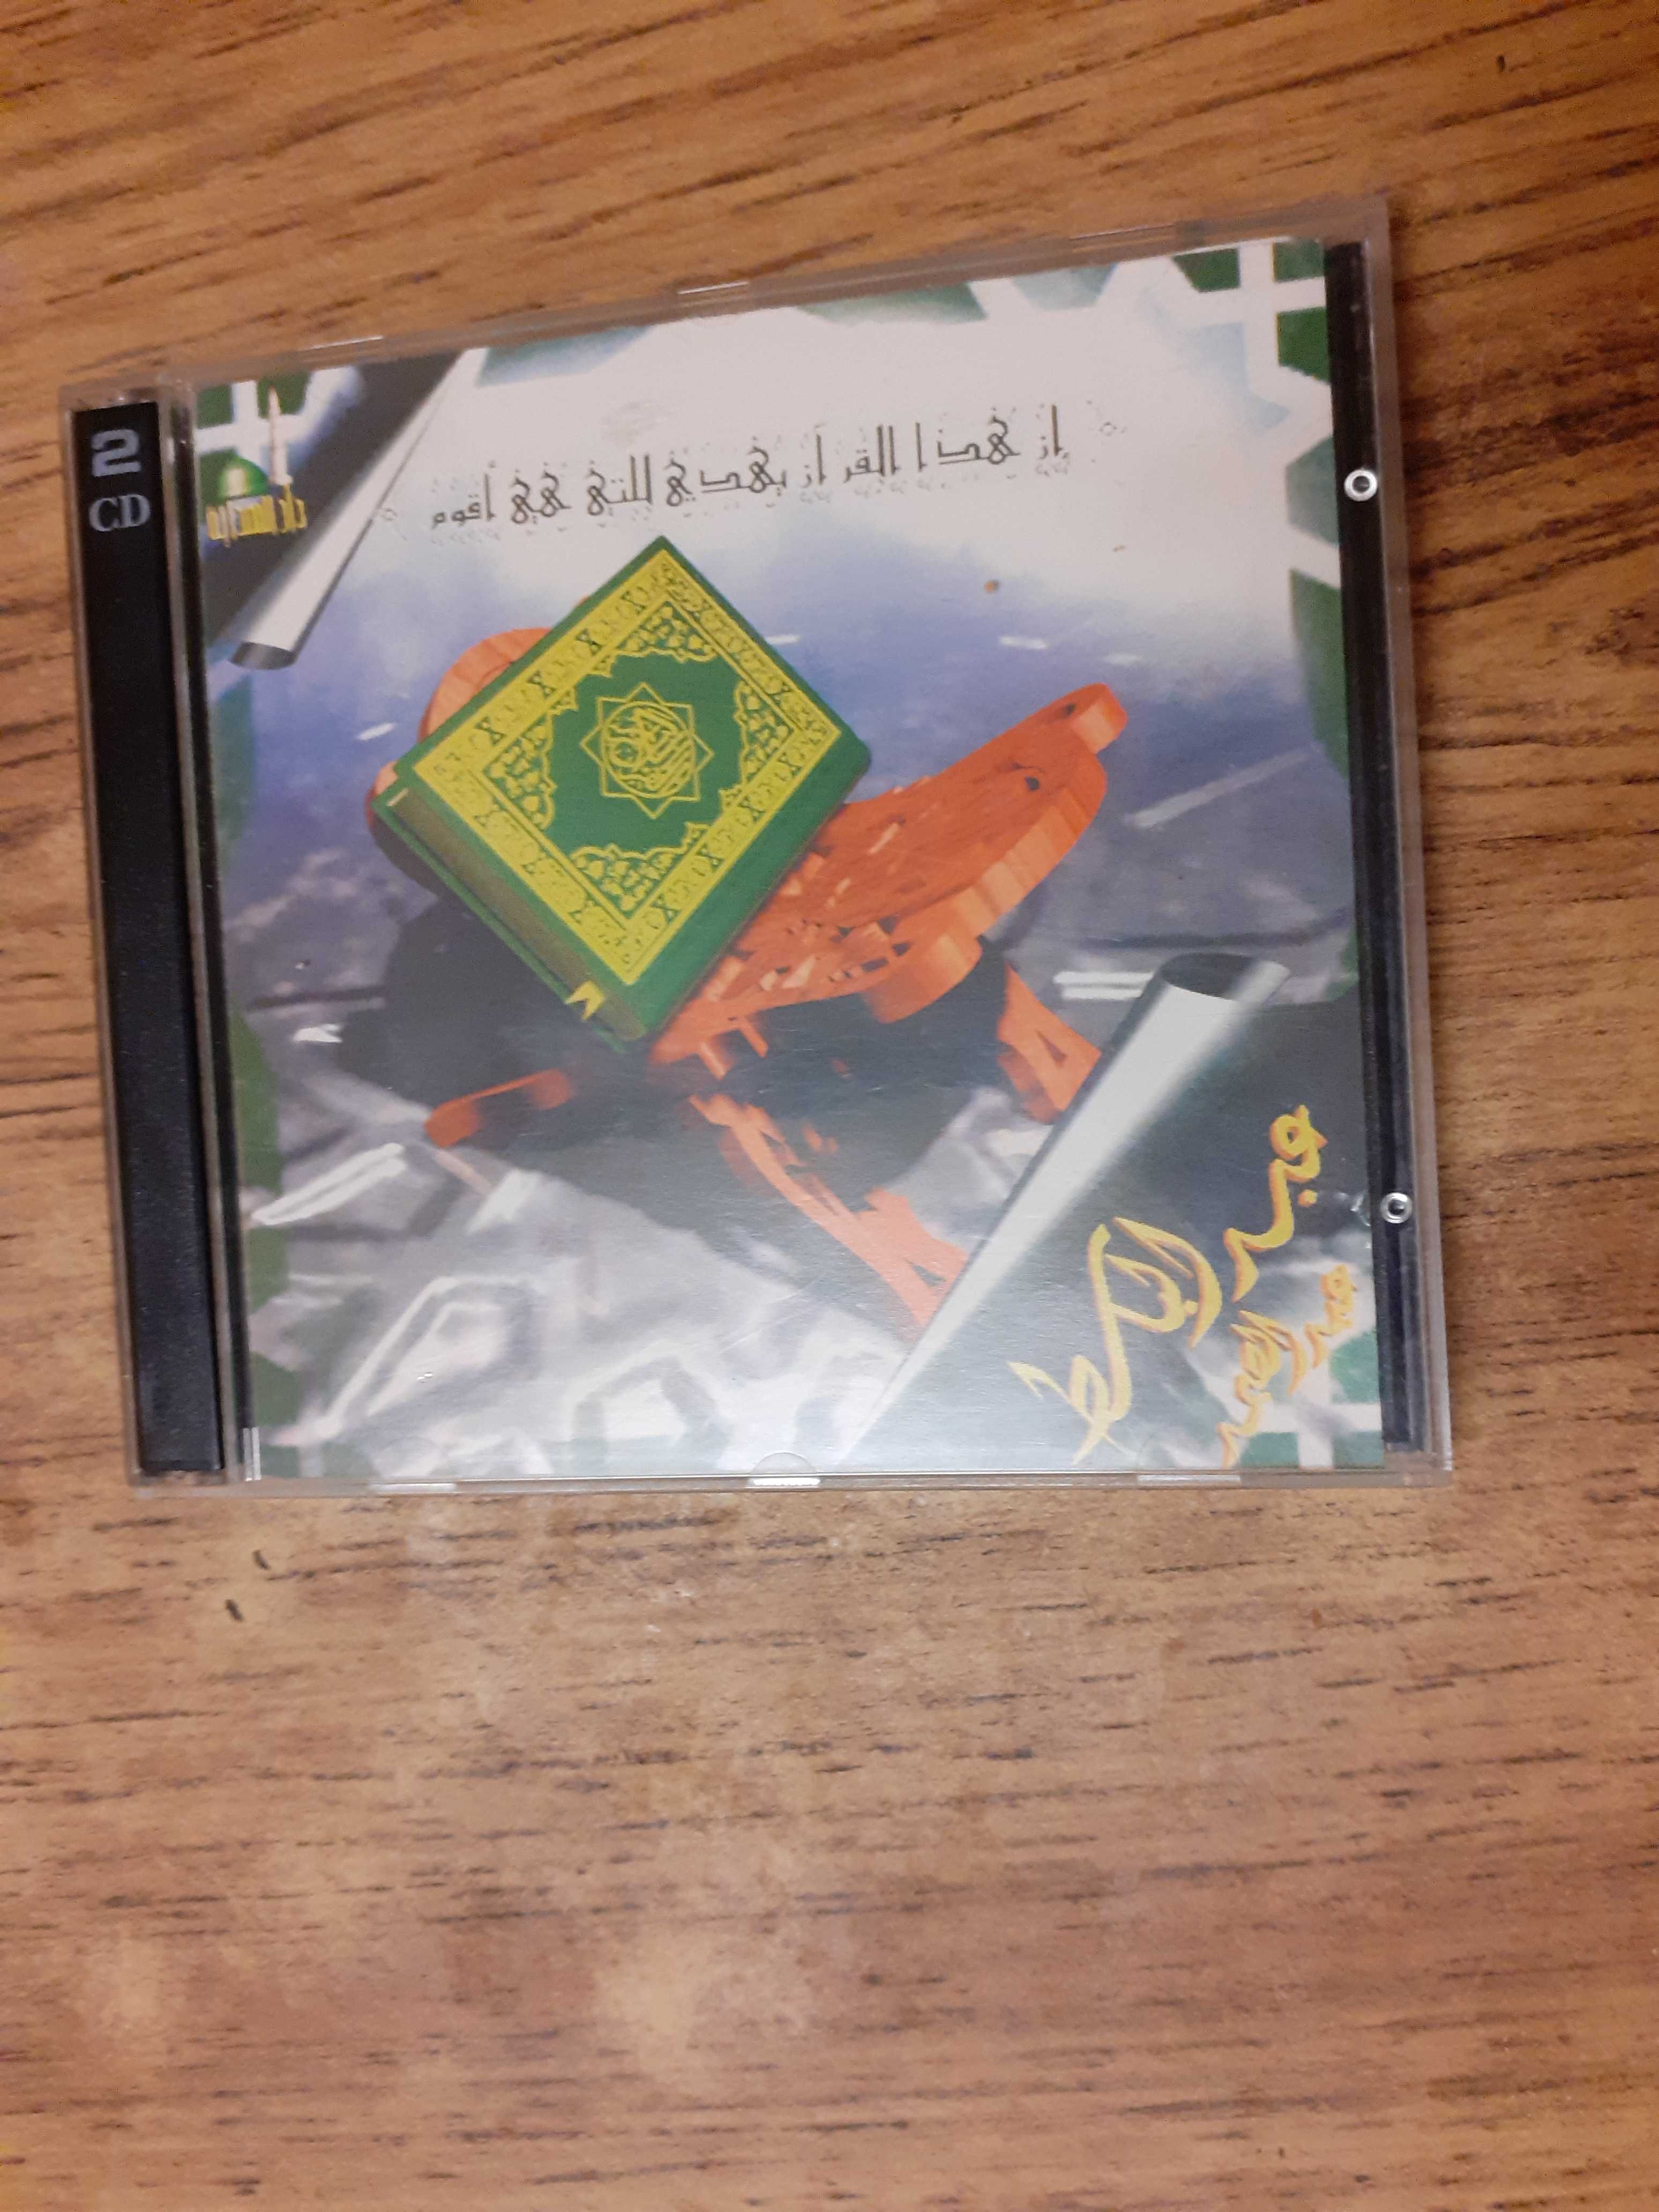 CD – The Holy Quran Sheihh/Abdul Baset Abdul Samad – álbum duplo